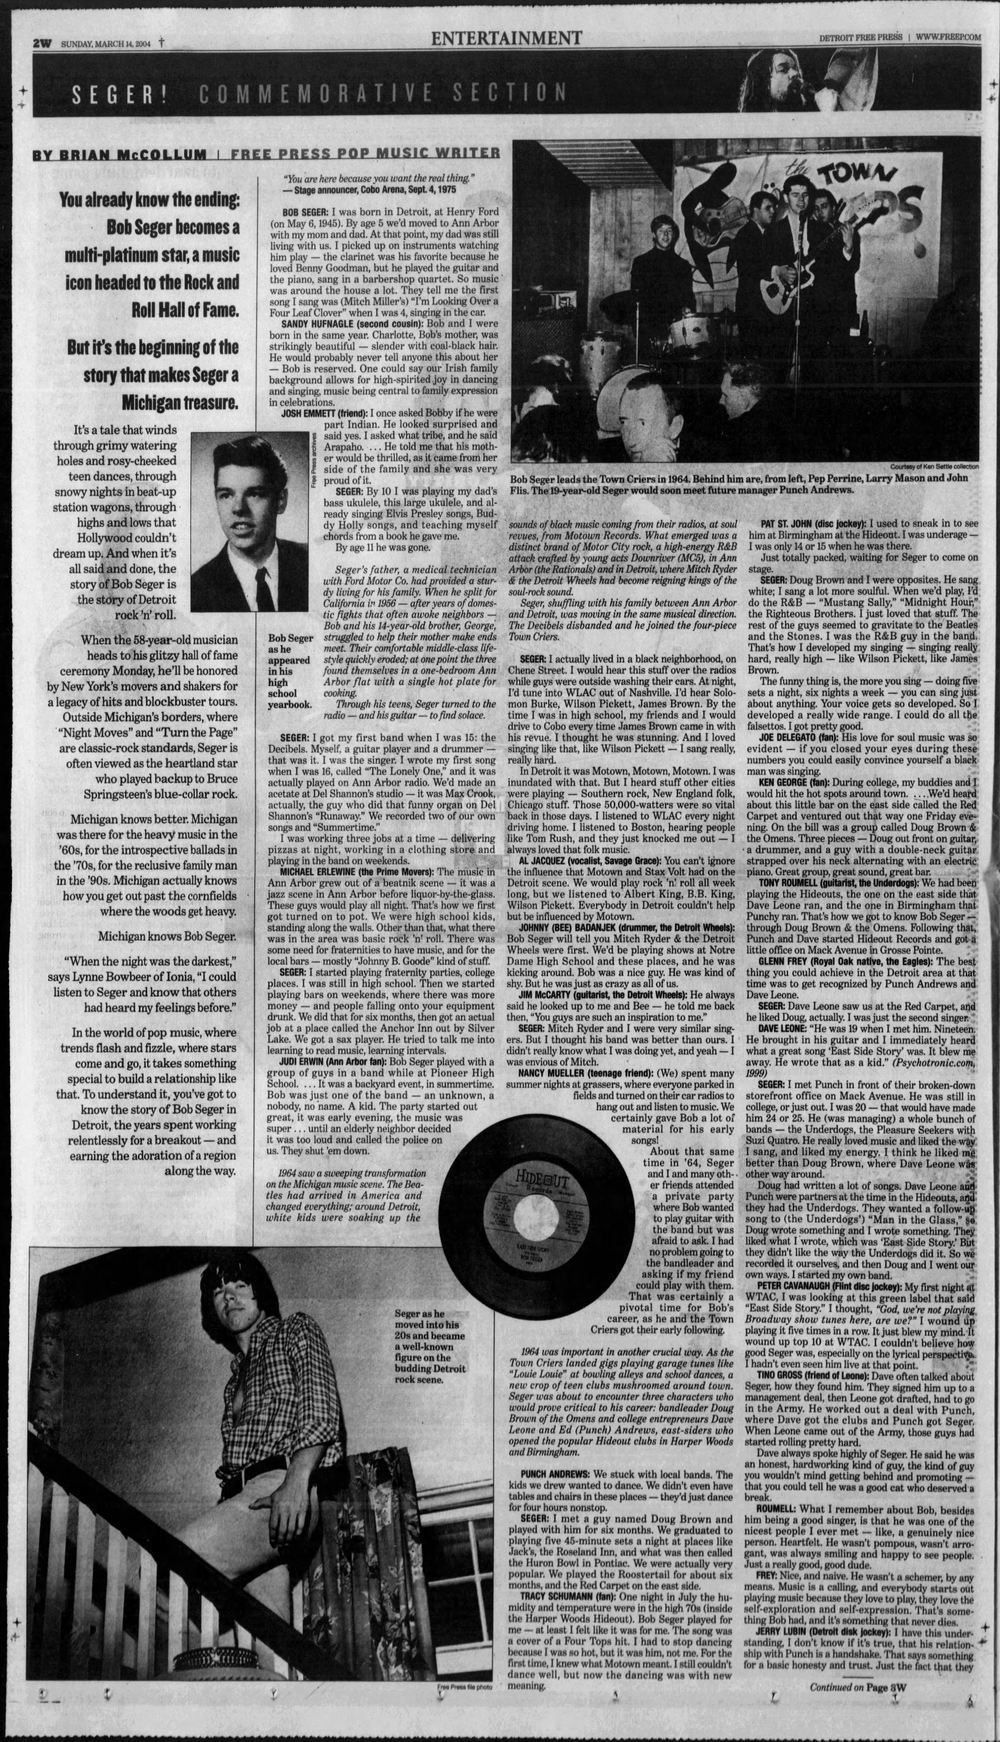 Firebird Lanes (Huron Bowl, JBs Lounge) - Mar 14 2004 Bob Seger Interview Mentioning Alley